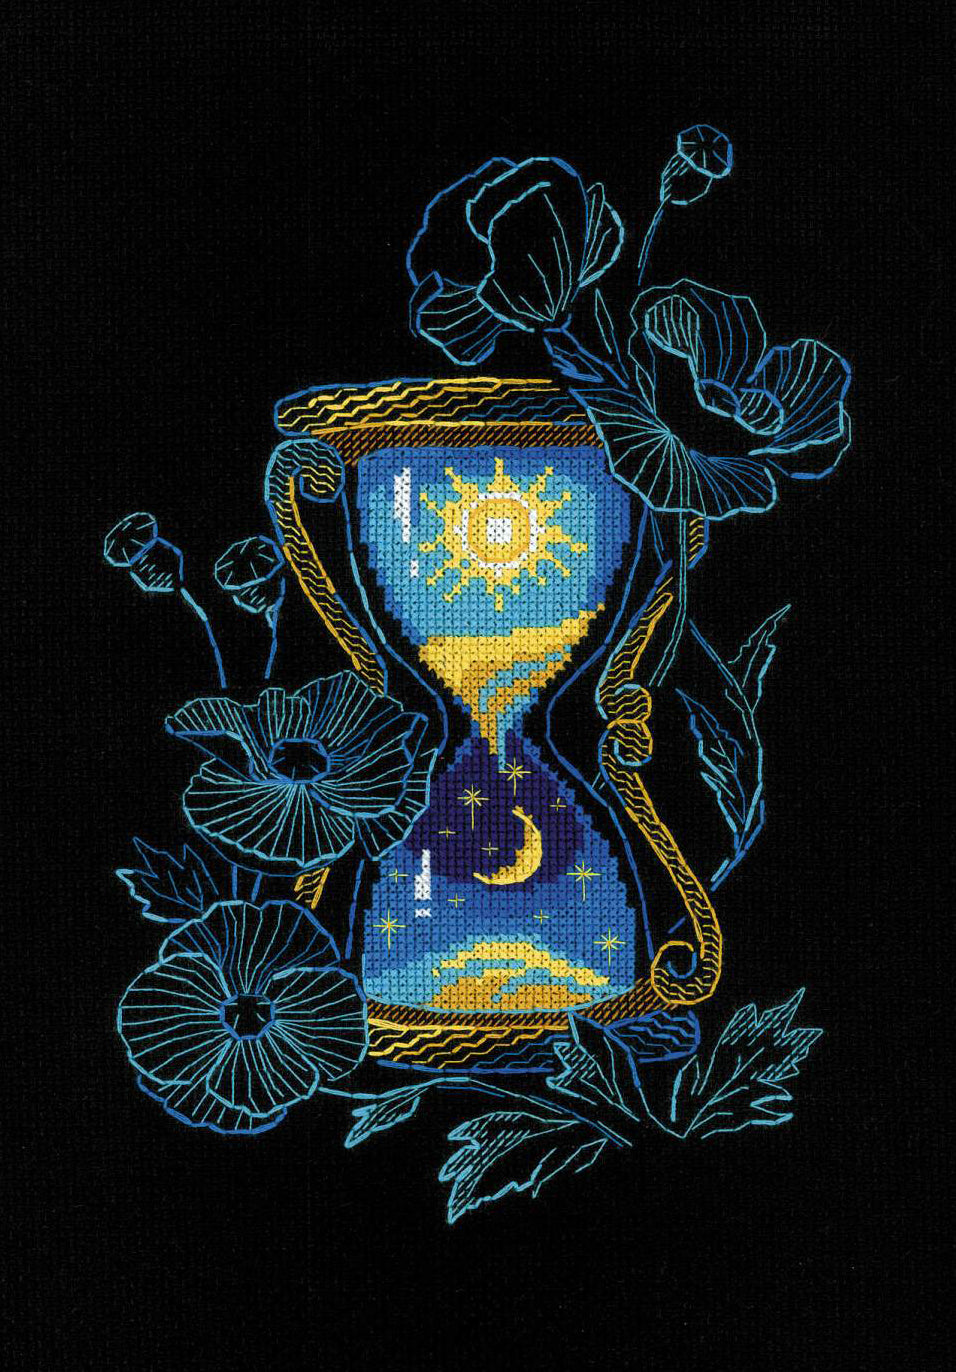 Cross Stitch Kit - "Magic of Time" - Riolis 2124